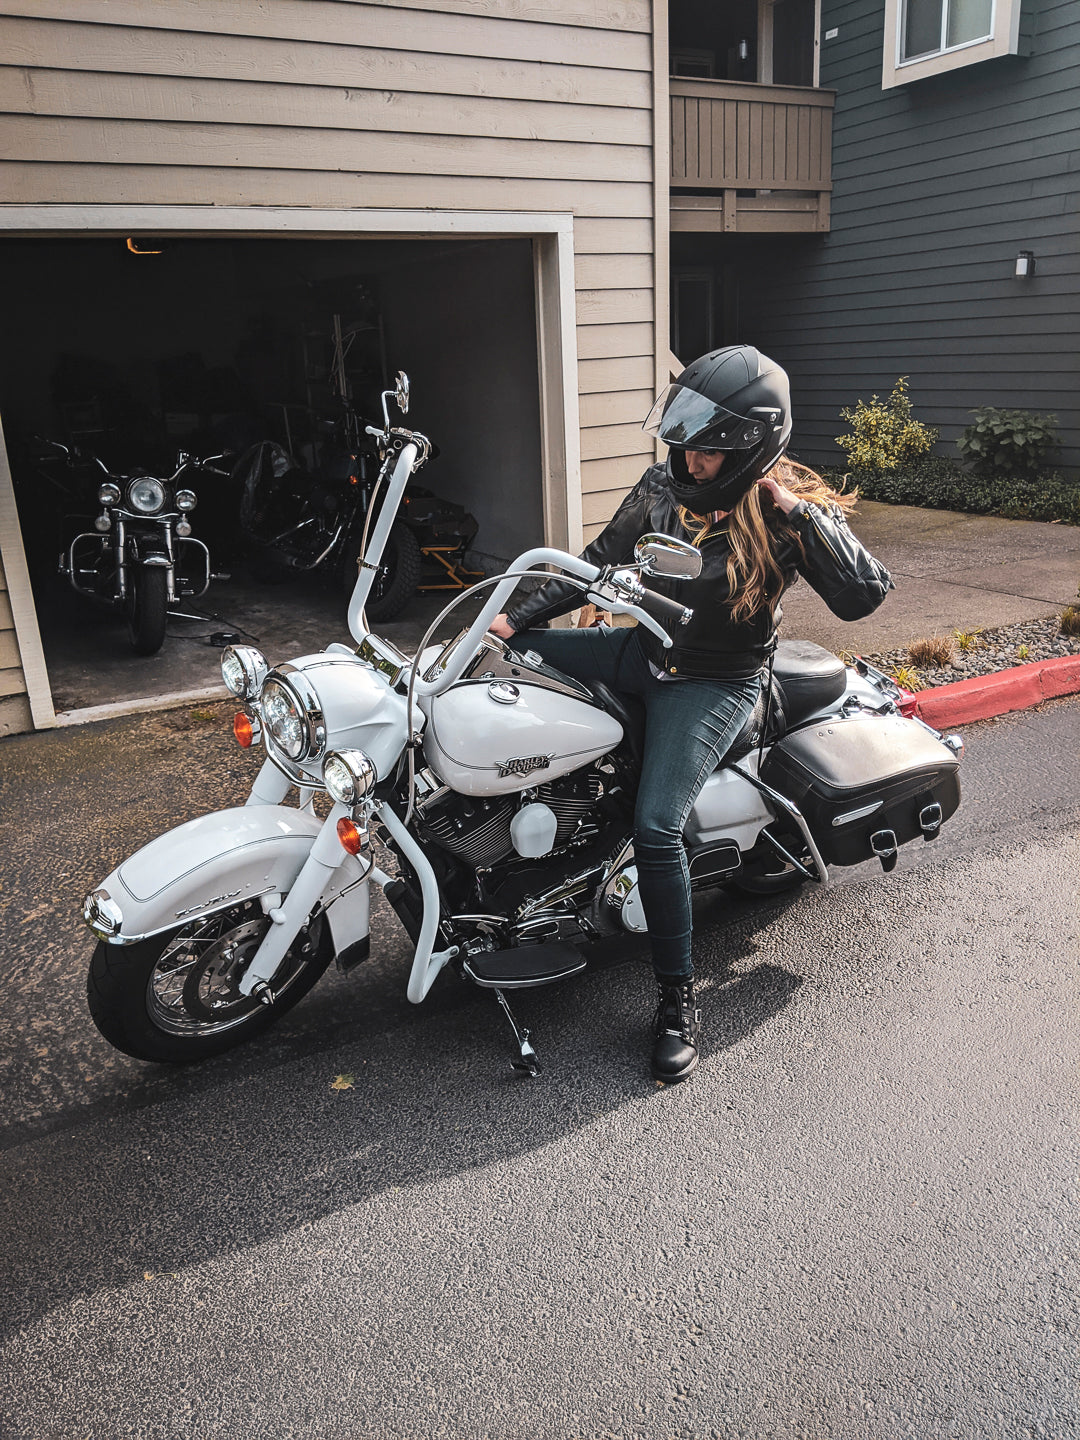 Shauna on her 2012 Harley Davidson Road King